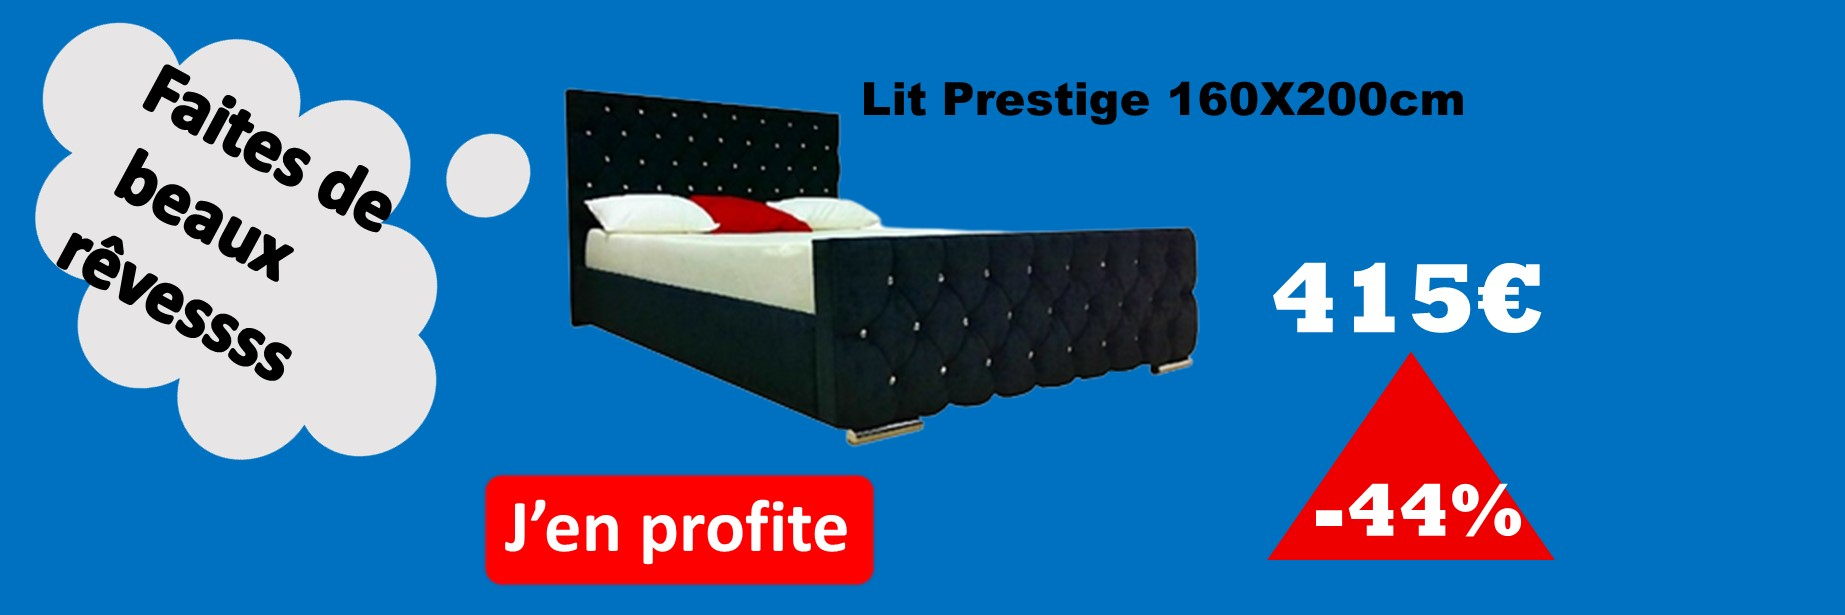  Lit prestige